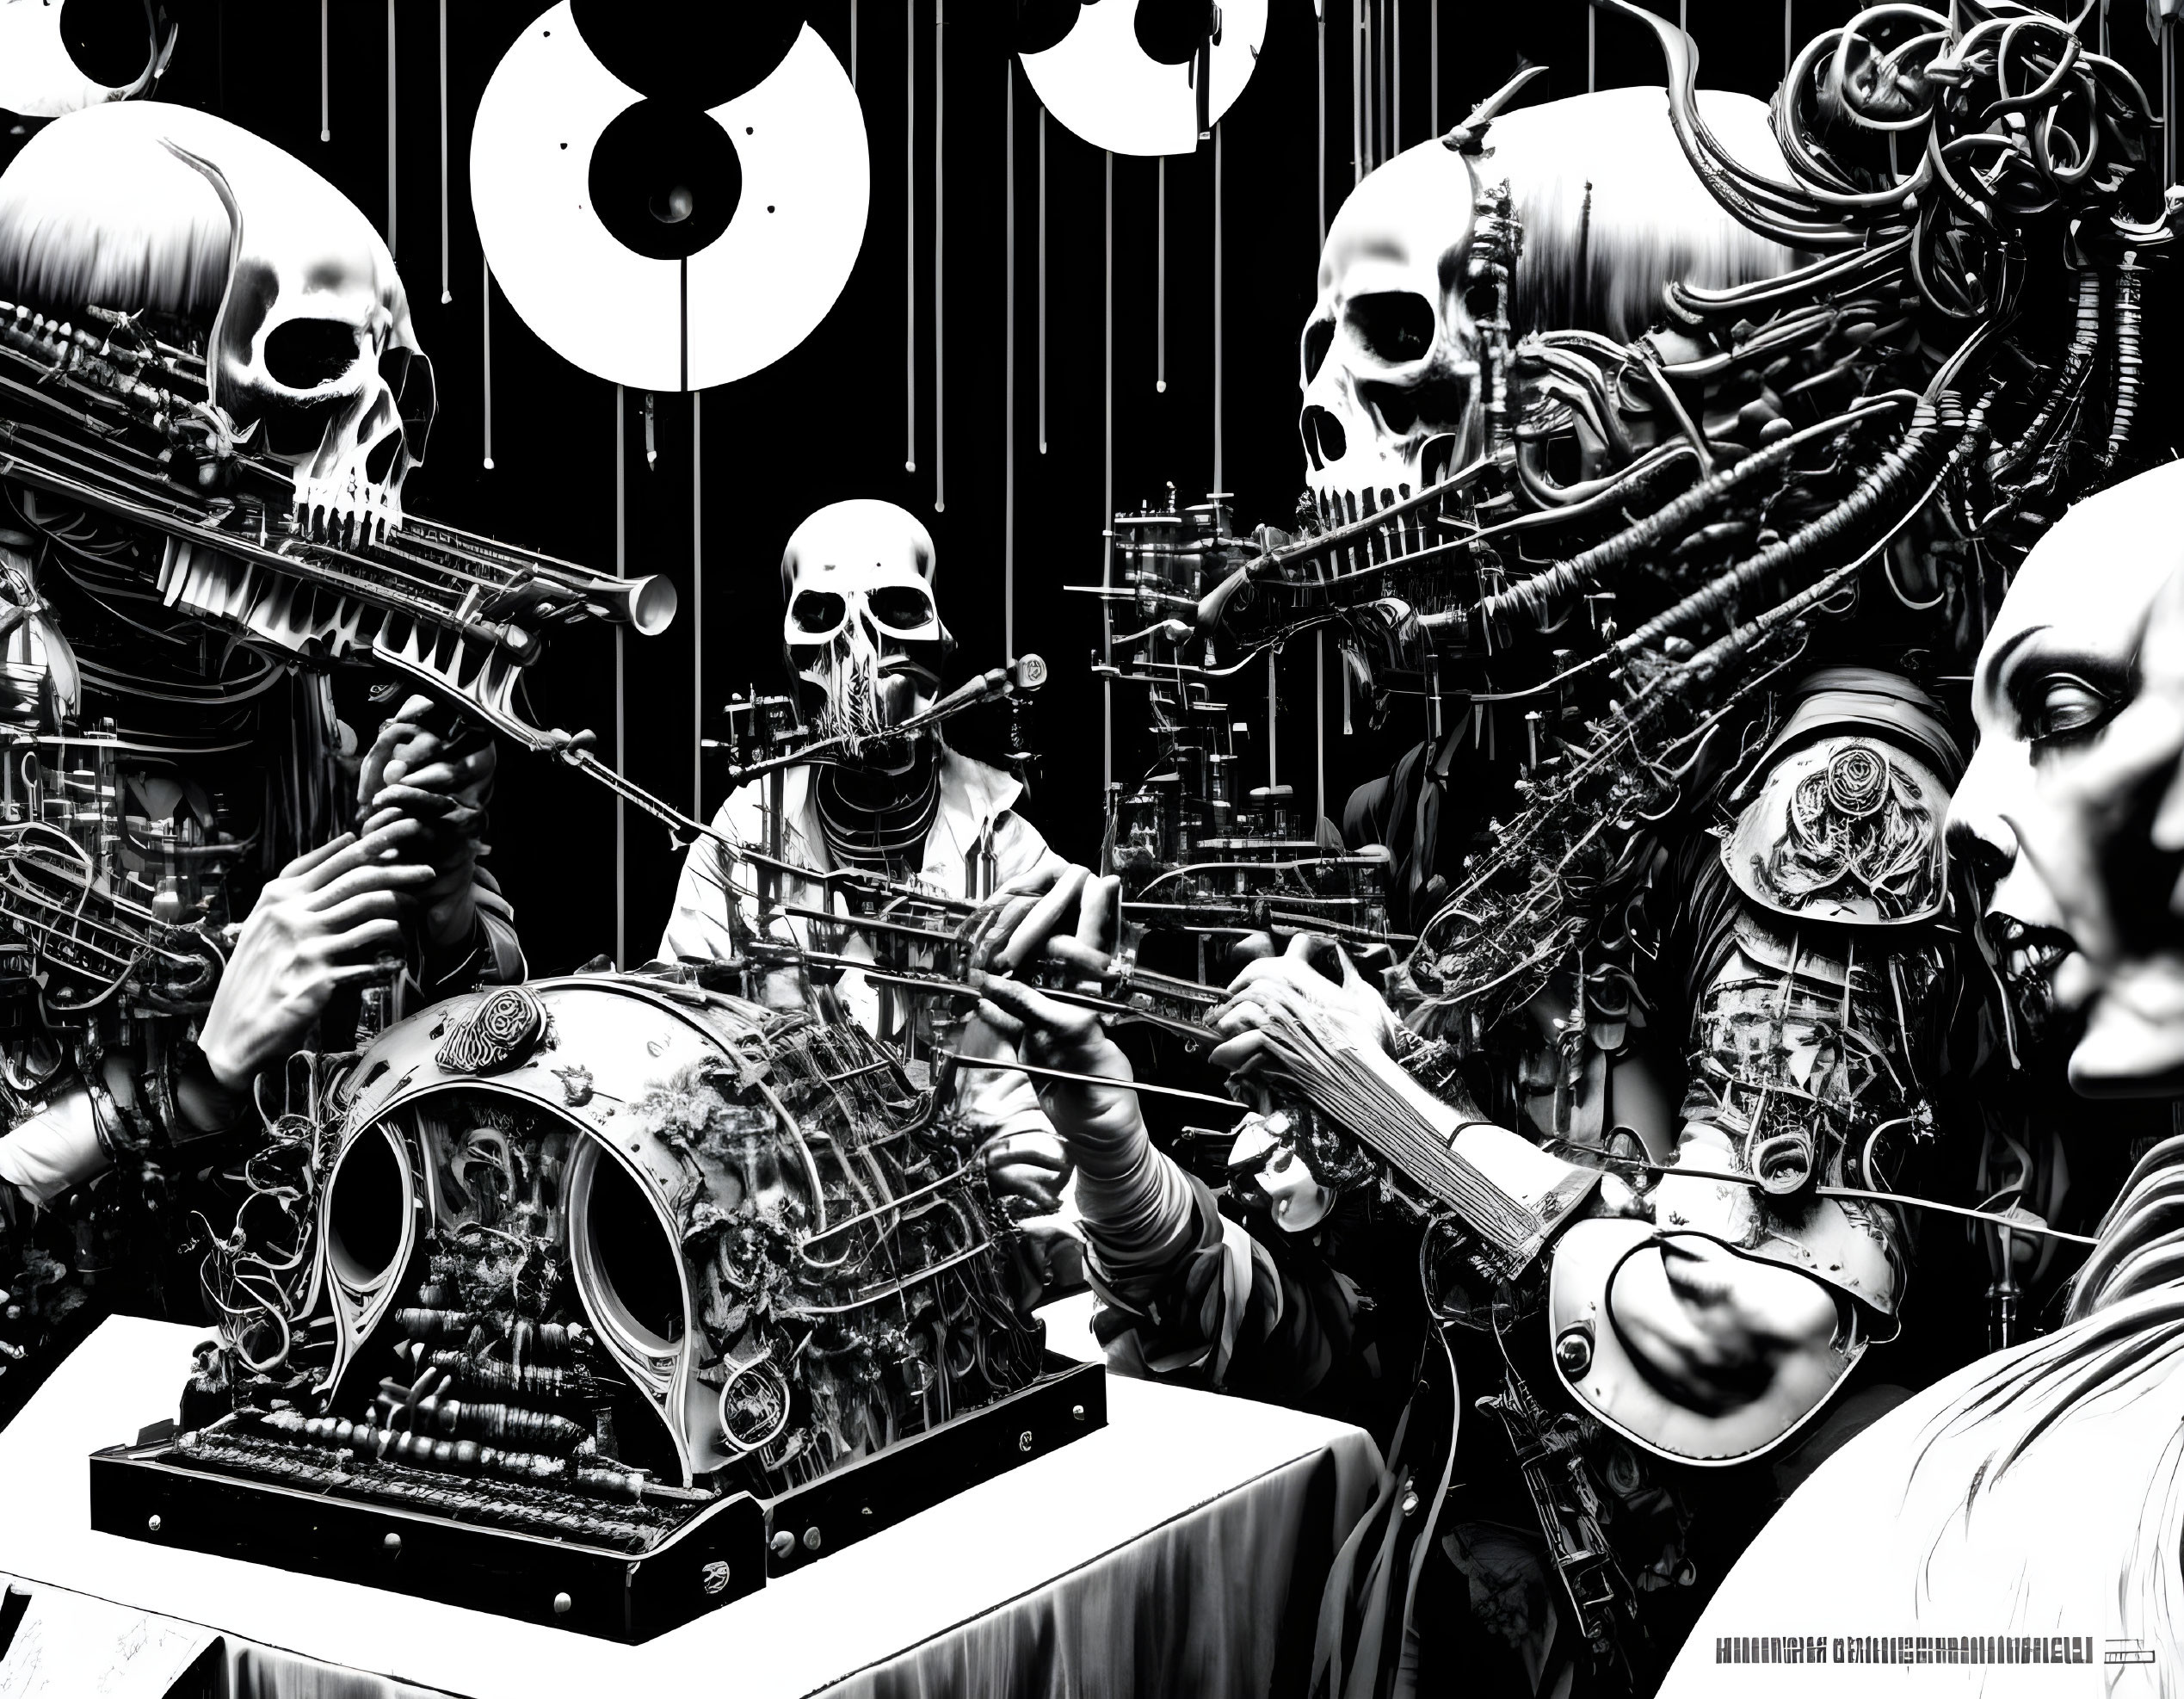 Cyberpunk Orchestra playing lobotomy